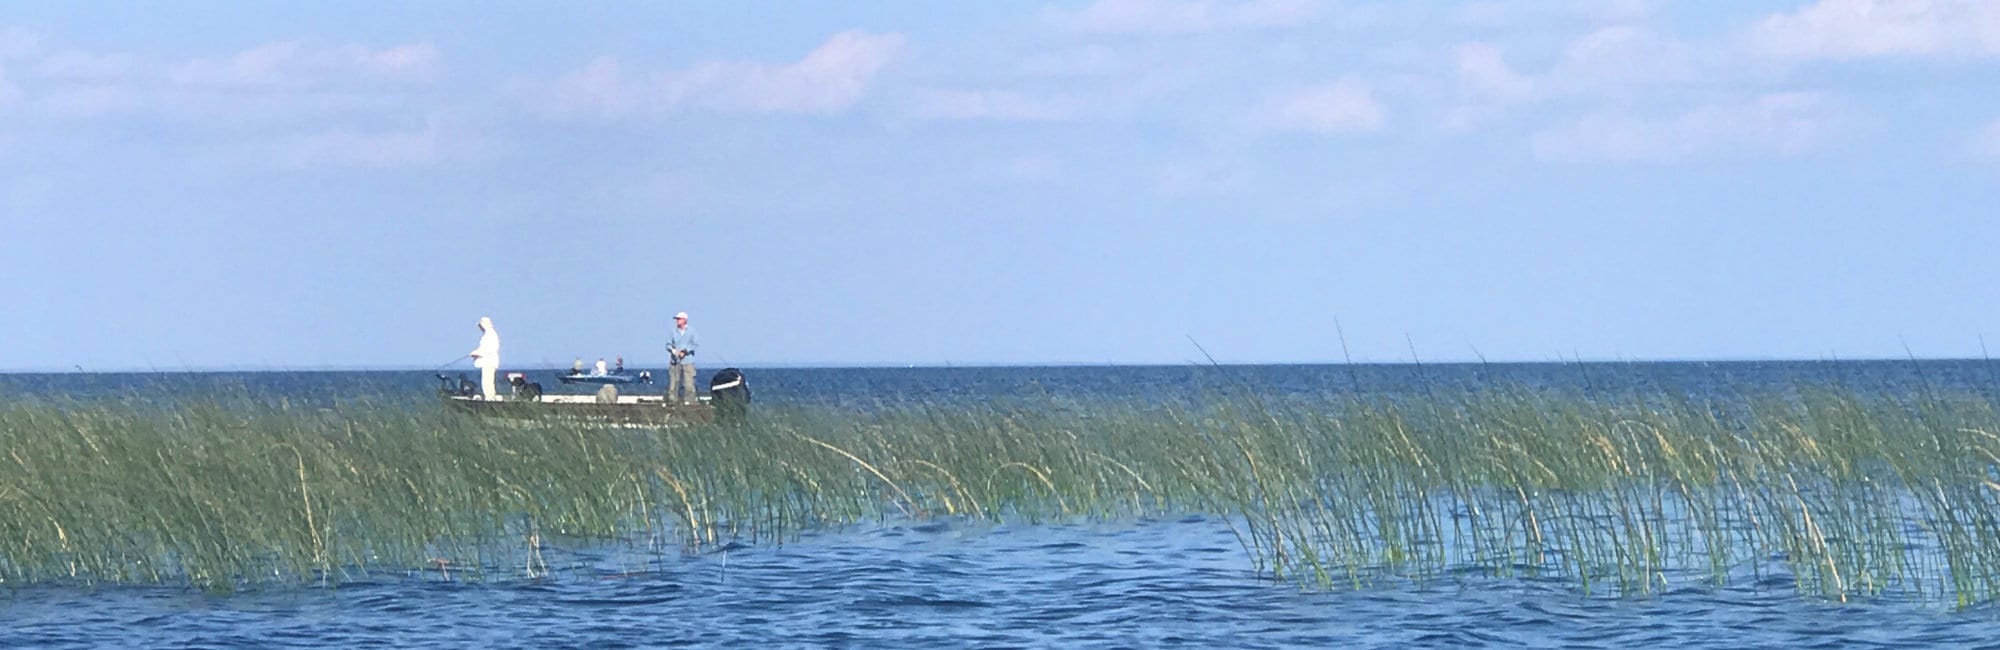 Slide-Fishing-In-Fisherman